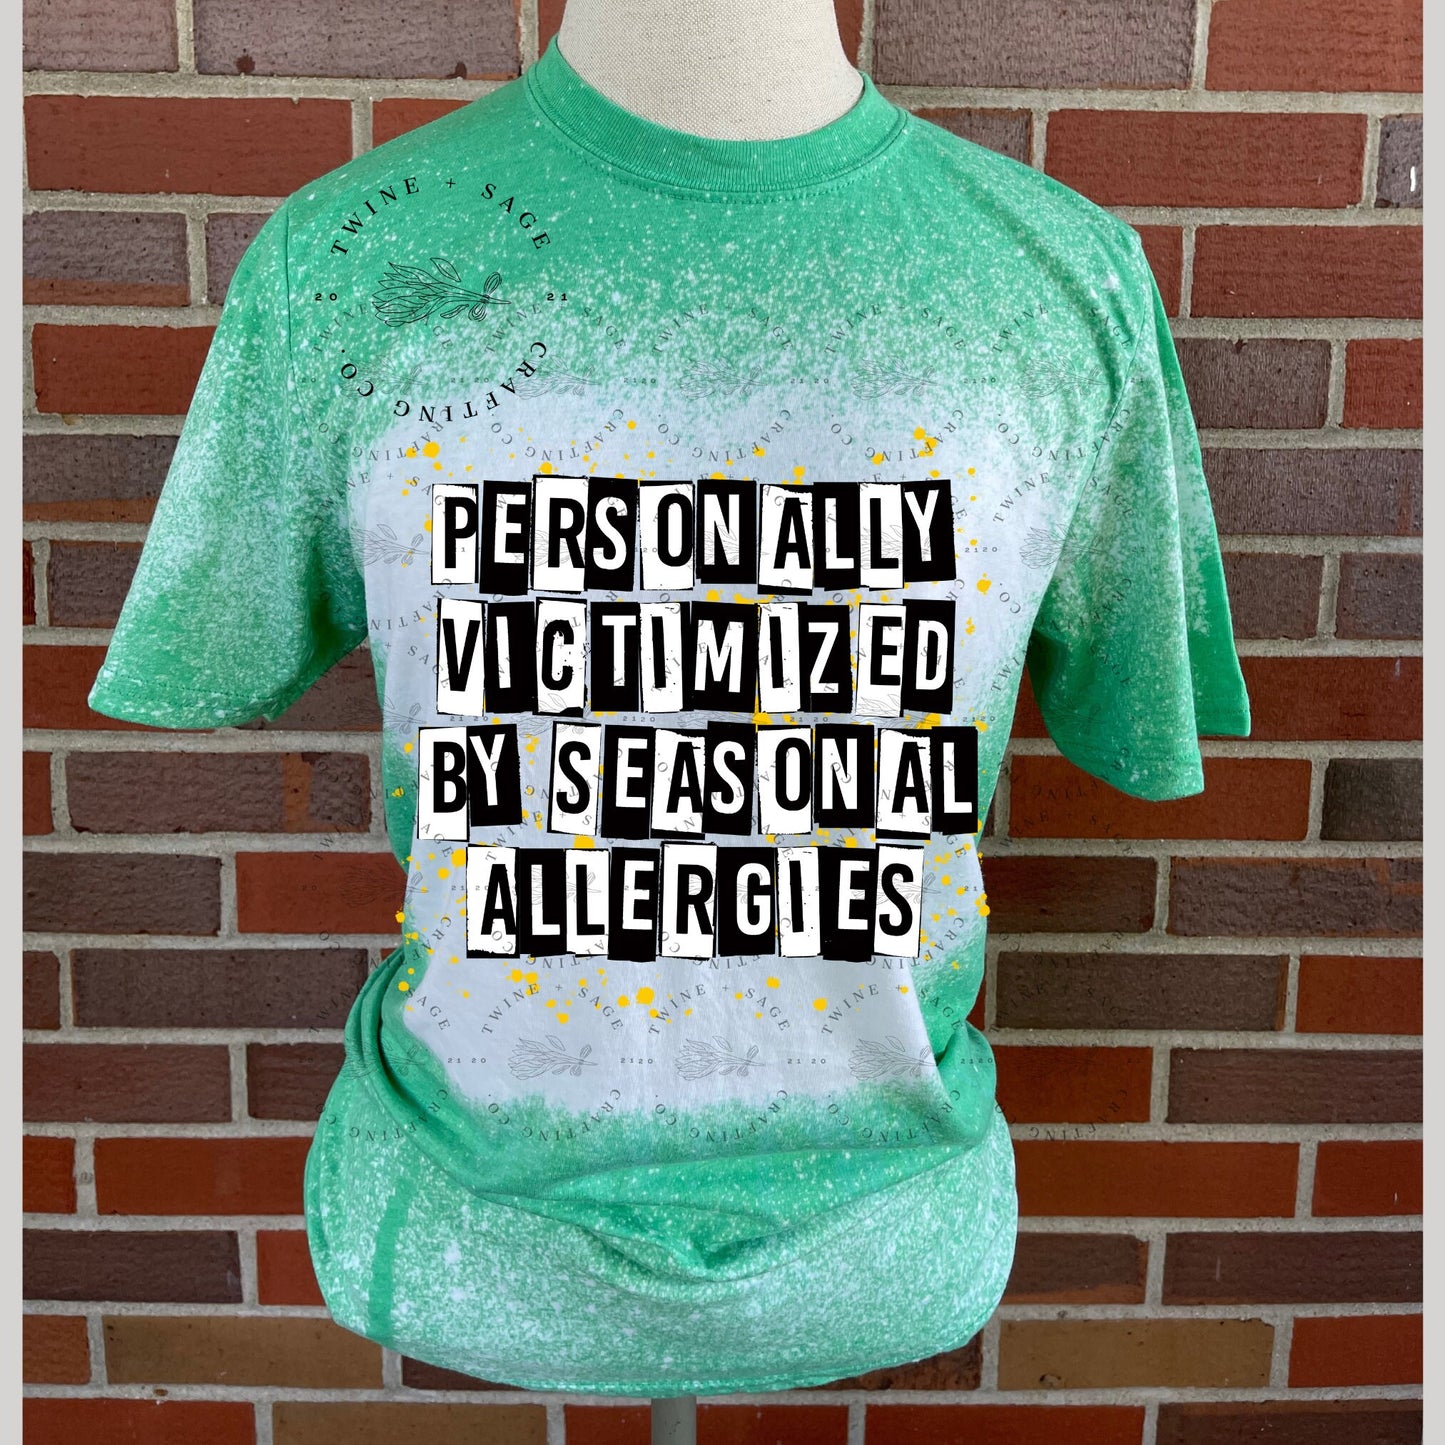 Allergies Shirt, Humor Shirt, Funny Shirt, Seasonal Allergies Shirt, Adult Humor Shirt, Summer Graphic Shirt, Women's Tee